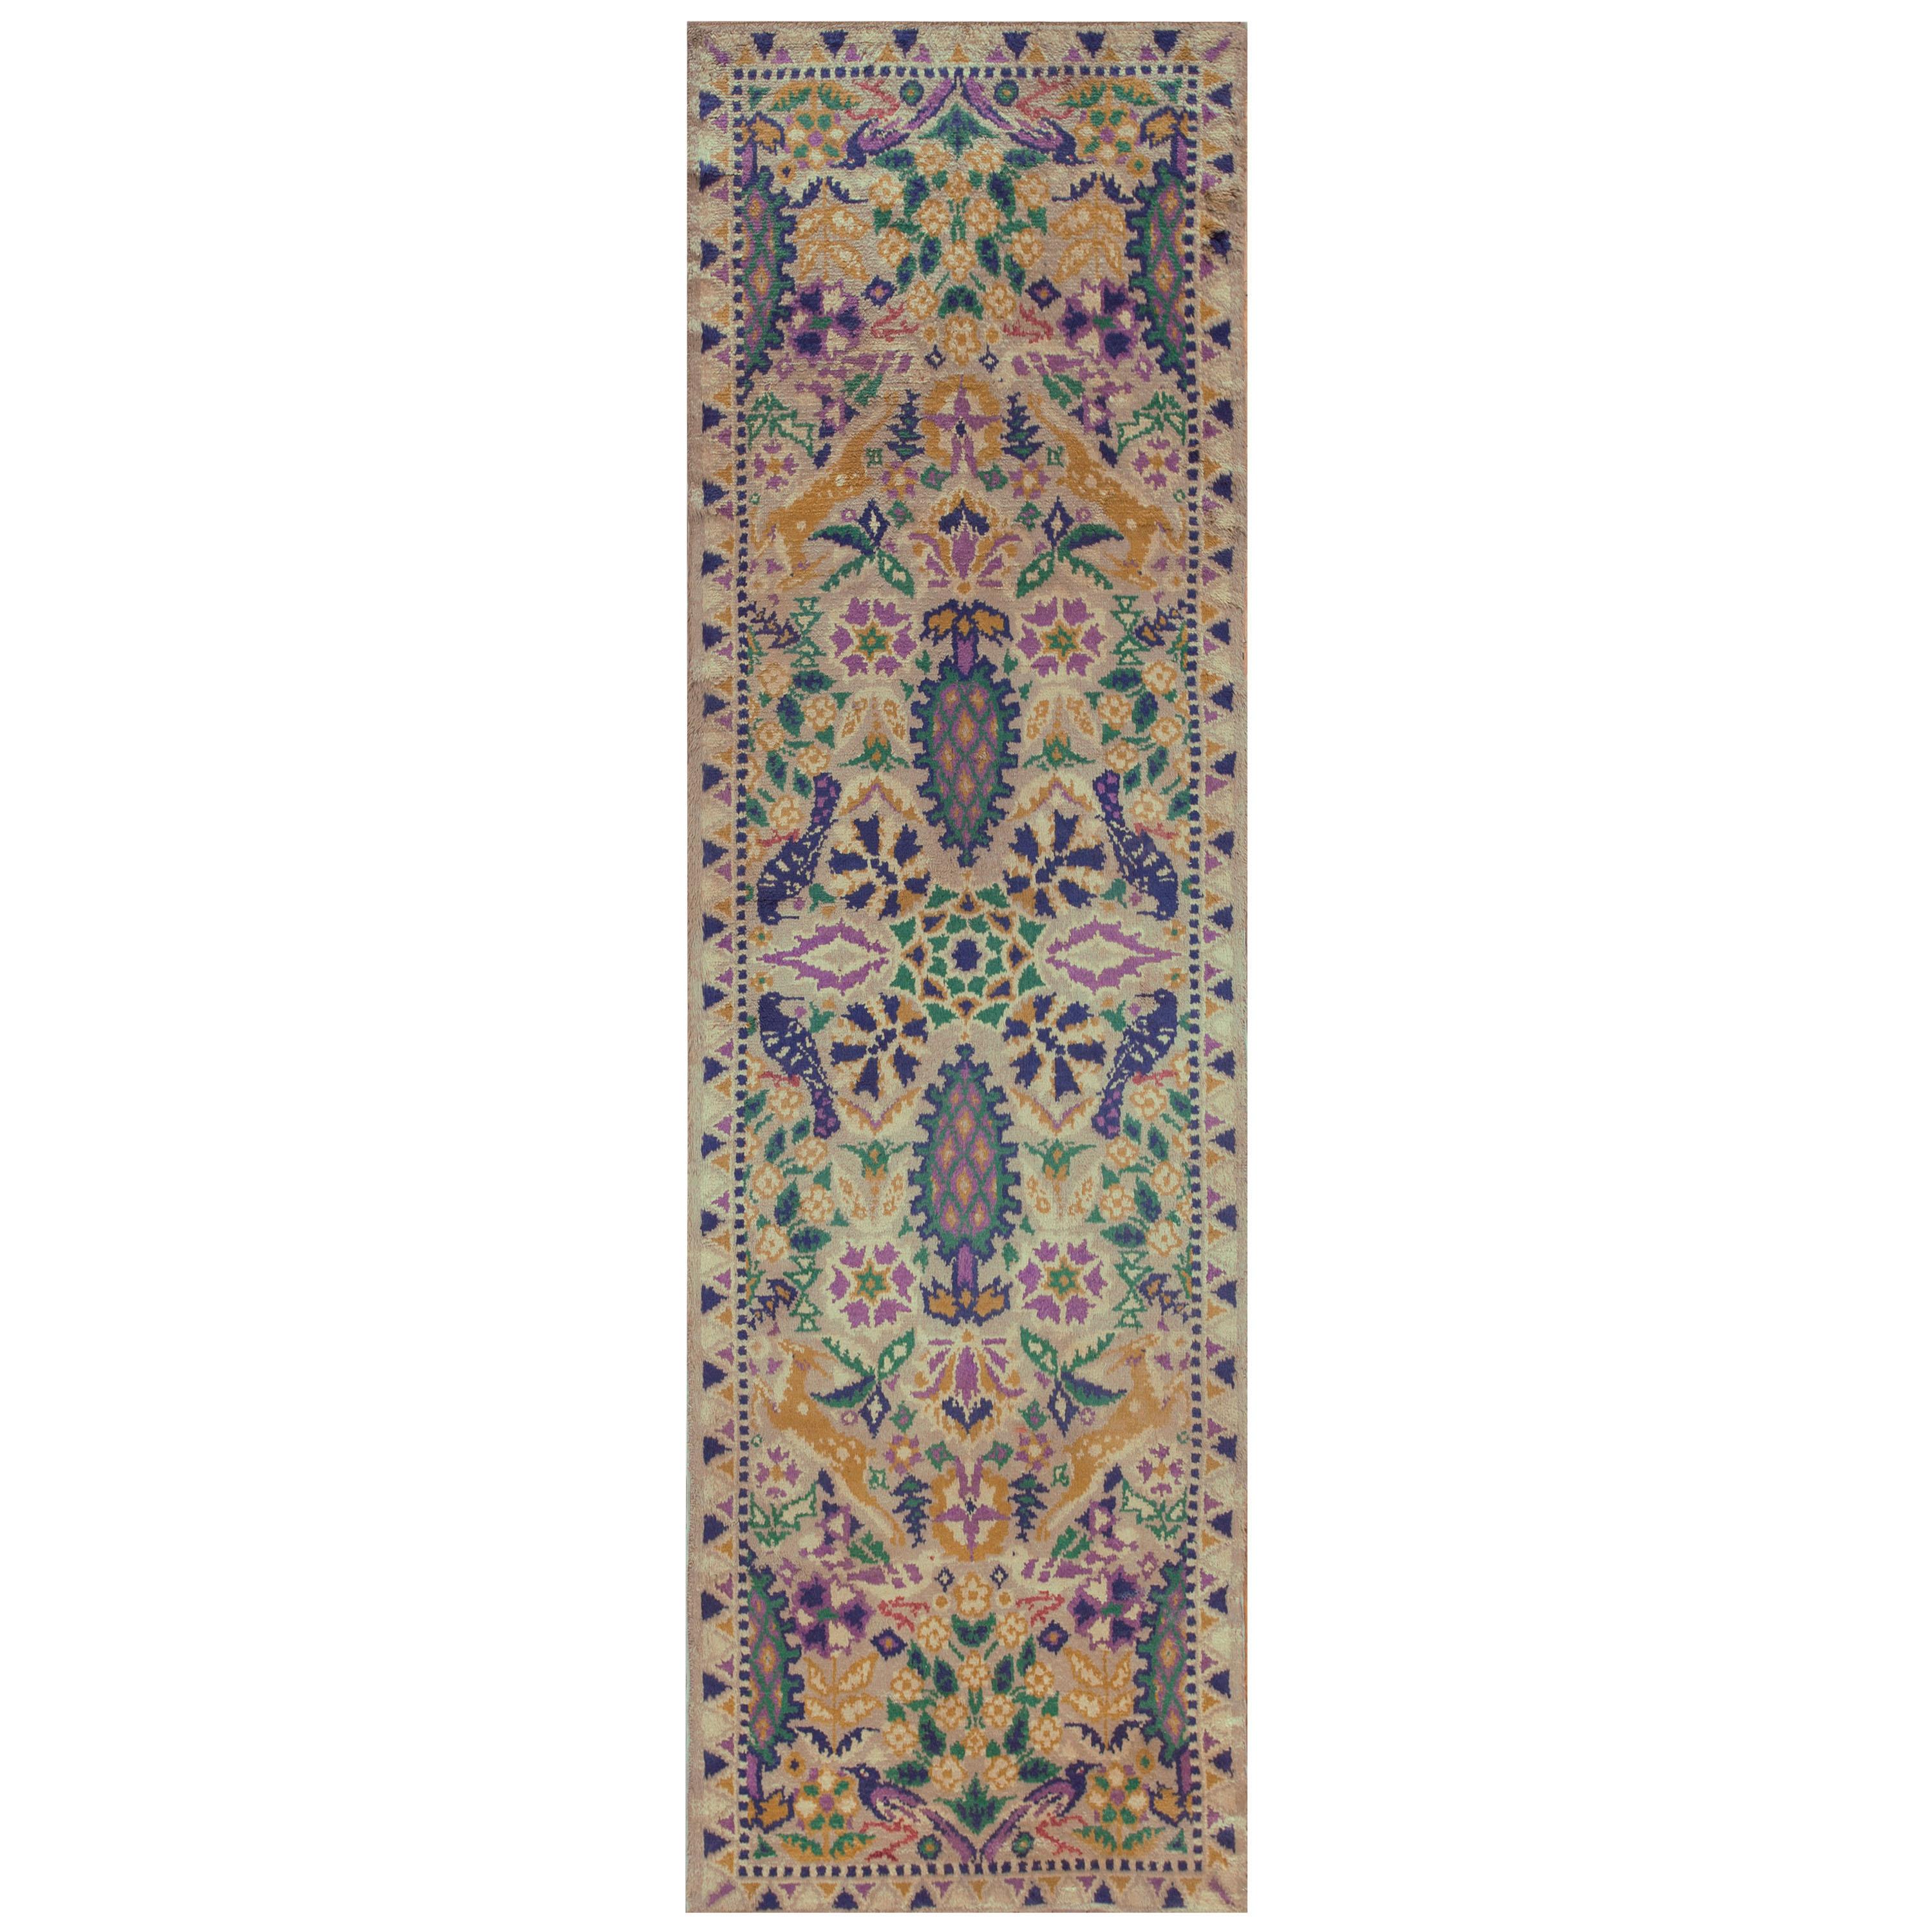 Early 20th Century Irish Donegal Arts & Crafts Carpet (3'6" x 11'2" -107 x 341 )